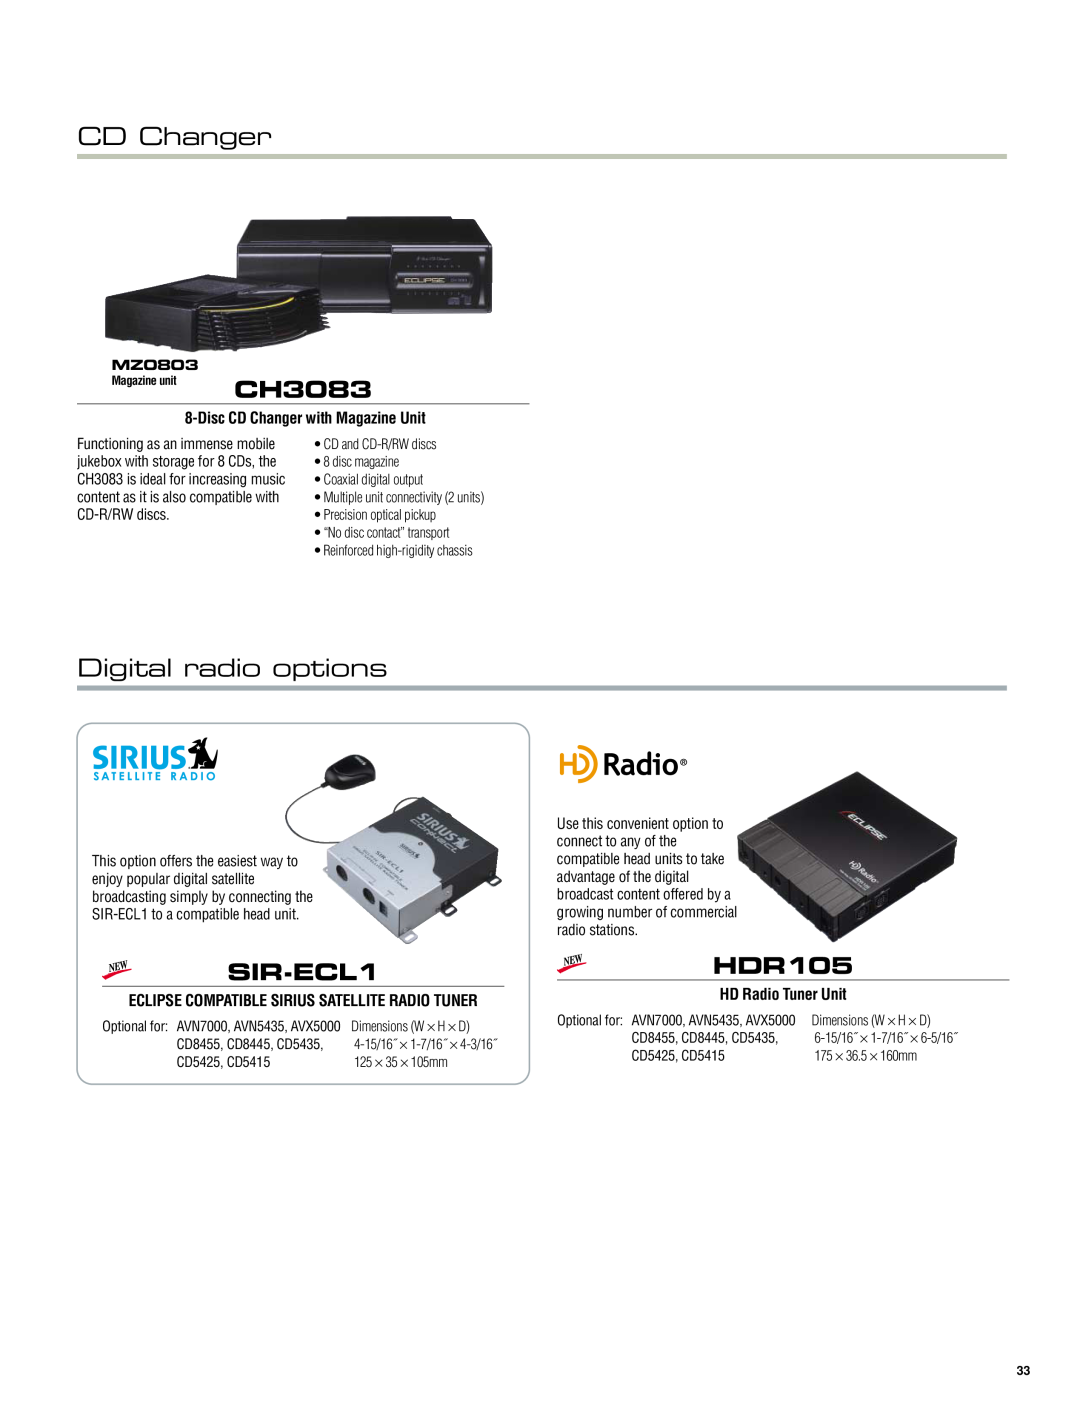 Eclipse - Fujitsu Ten TVR105 CD Changer, Digital radio options, CH3083, SIR-ECL1, HDR105, HD Radio Tuner Unit, MZ0803 